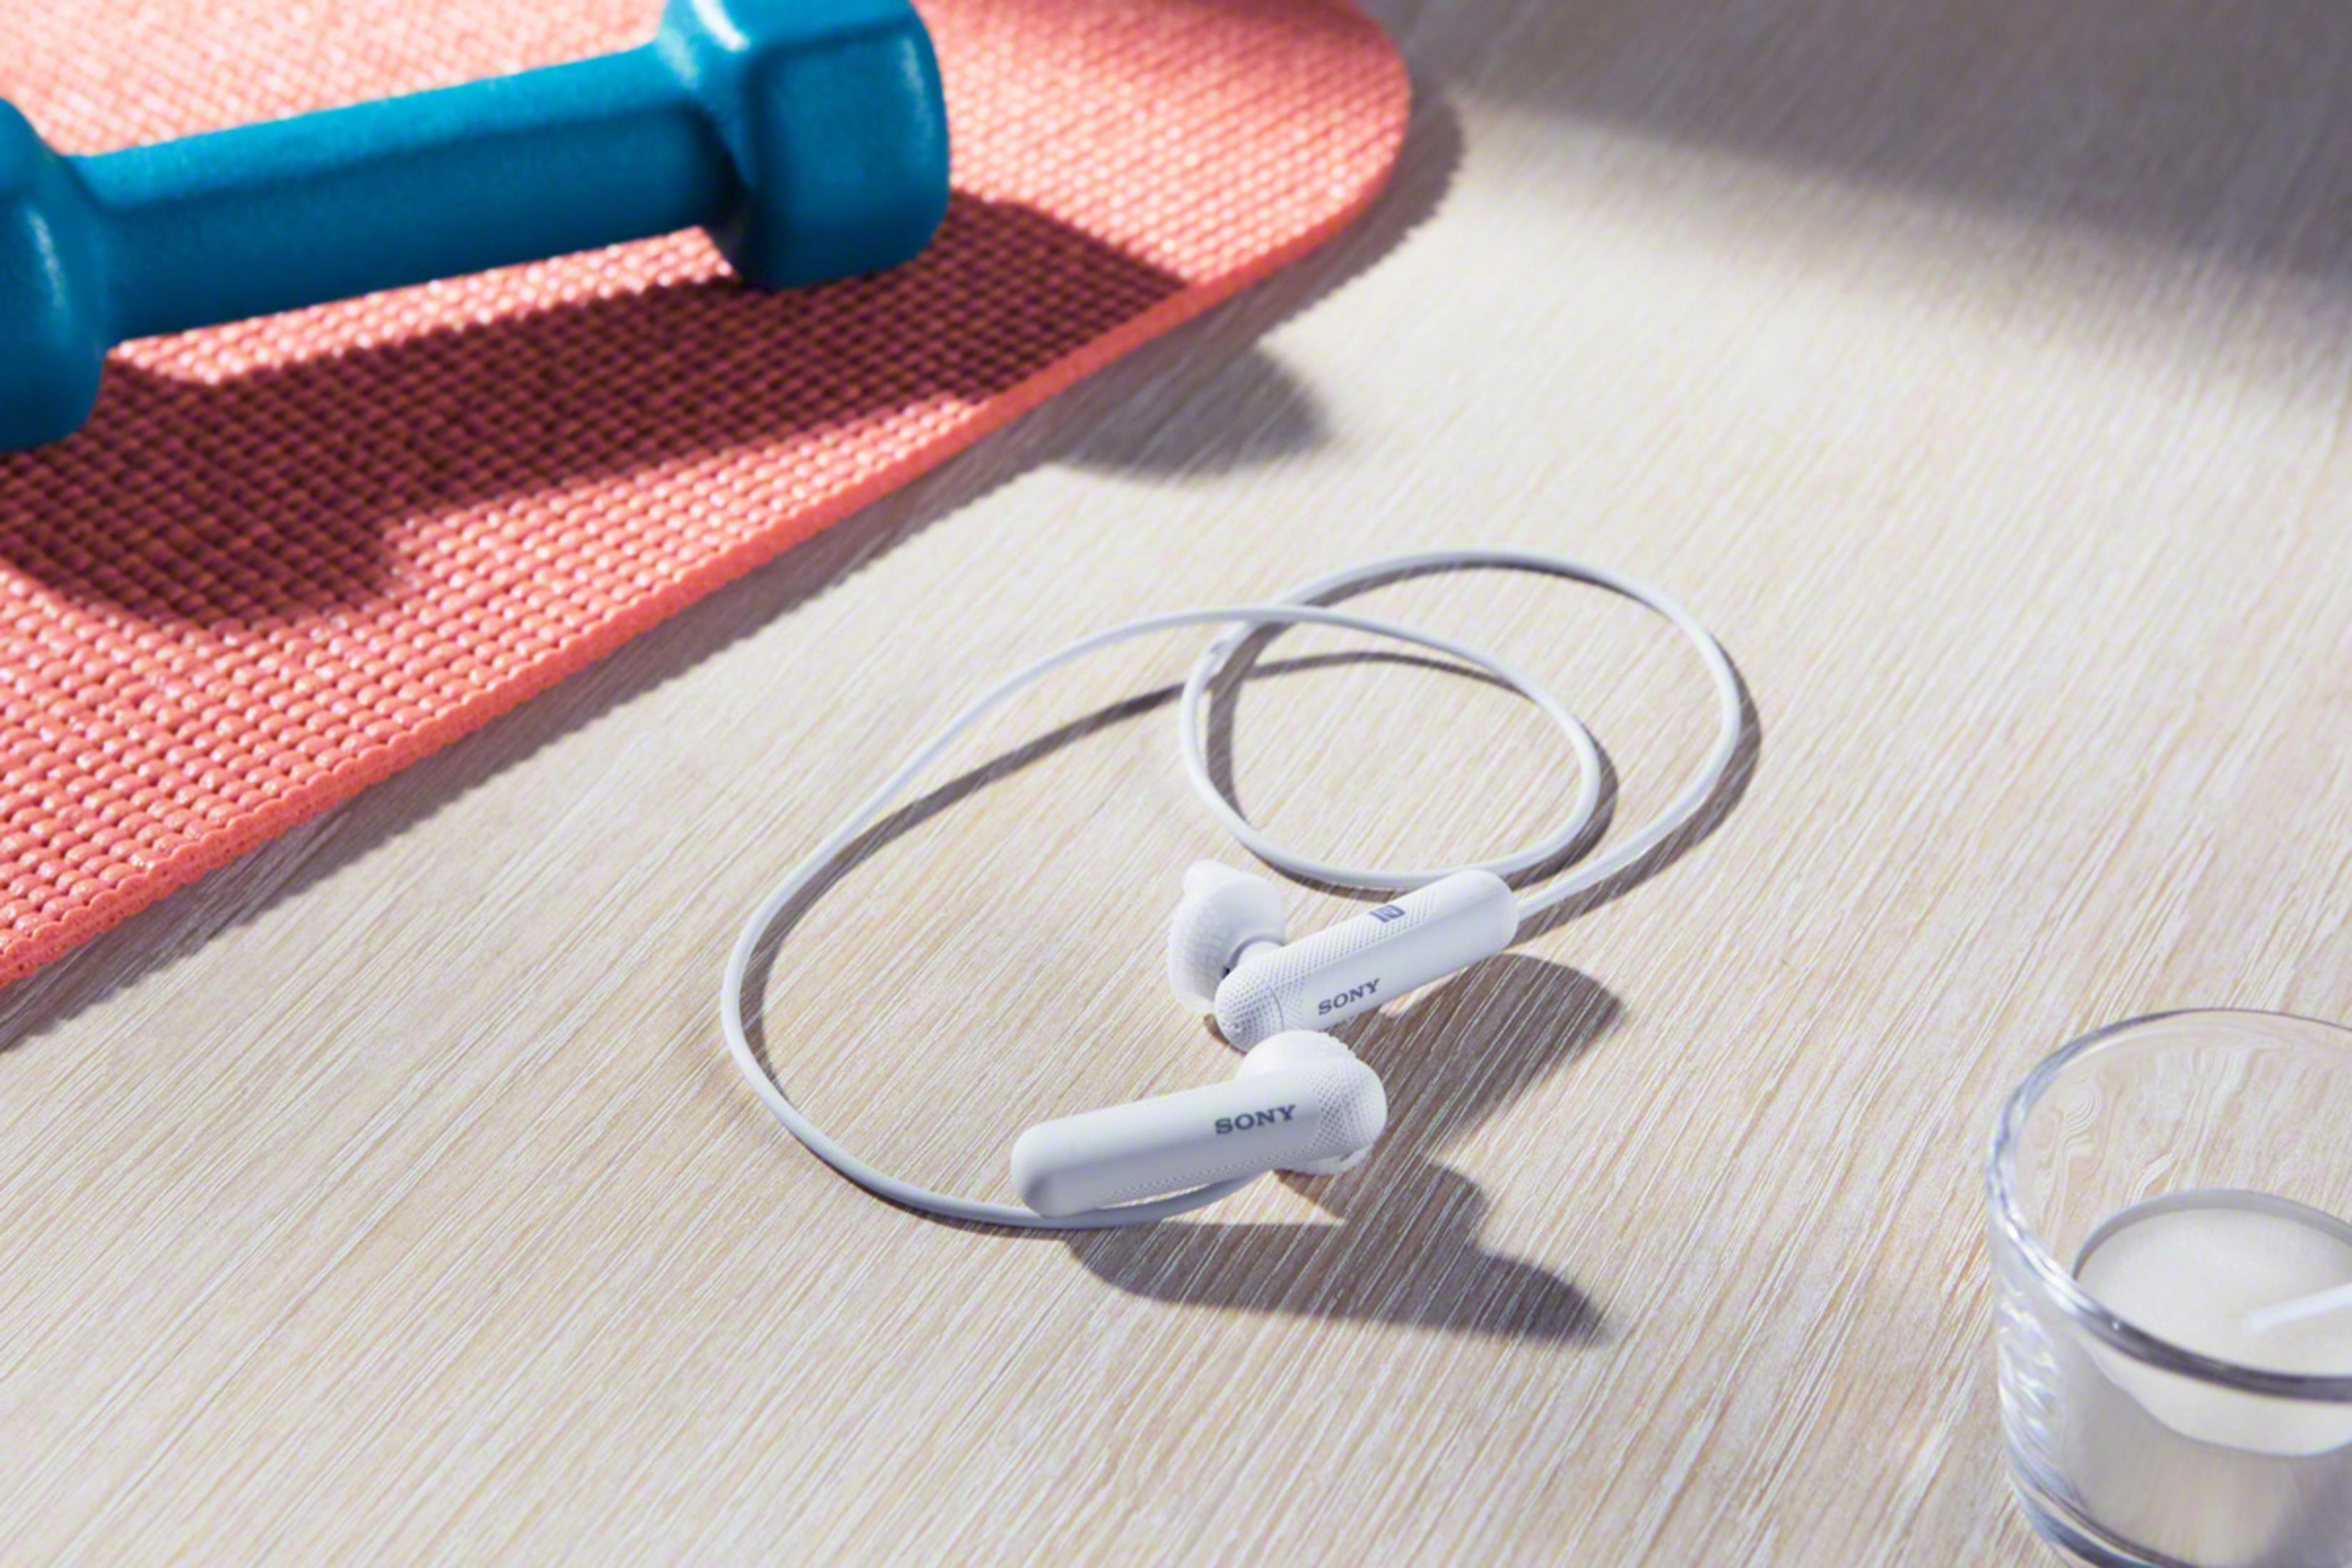 SONY WI-SP W In-ear WEISS, Kopfhörer Bluetooth Weiß 500